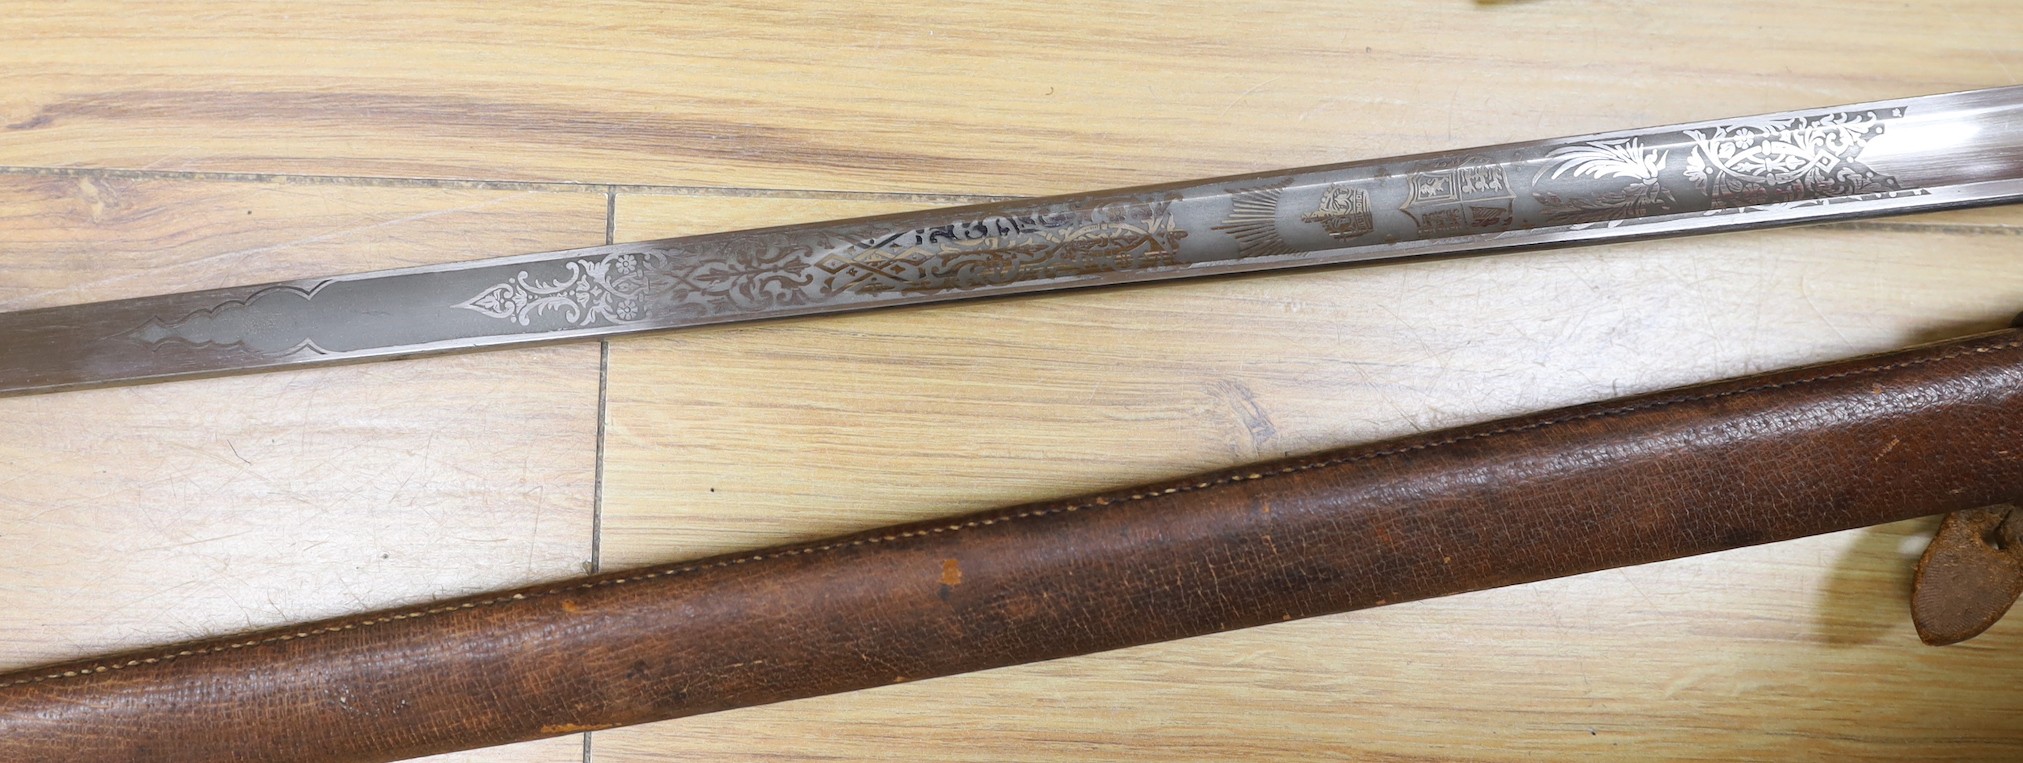 A George V Fenton Brothers Ltd. dress sword and sheath - Image 4 of 5